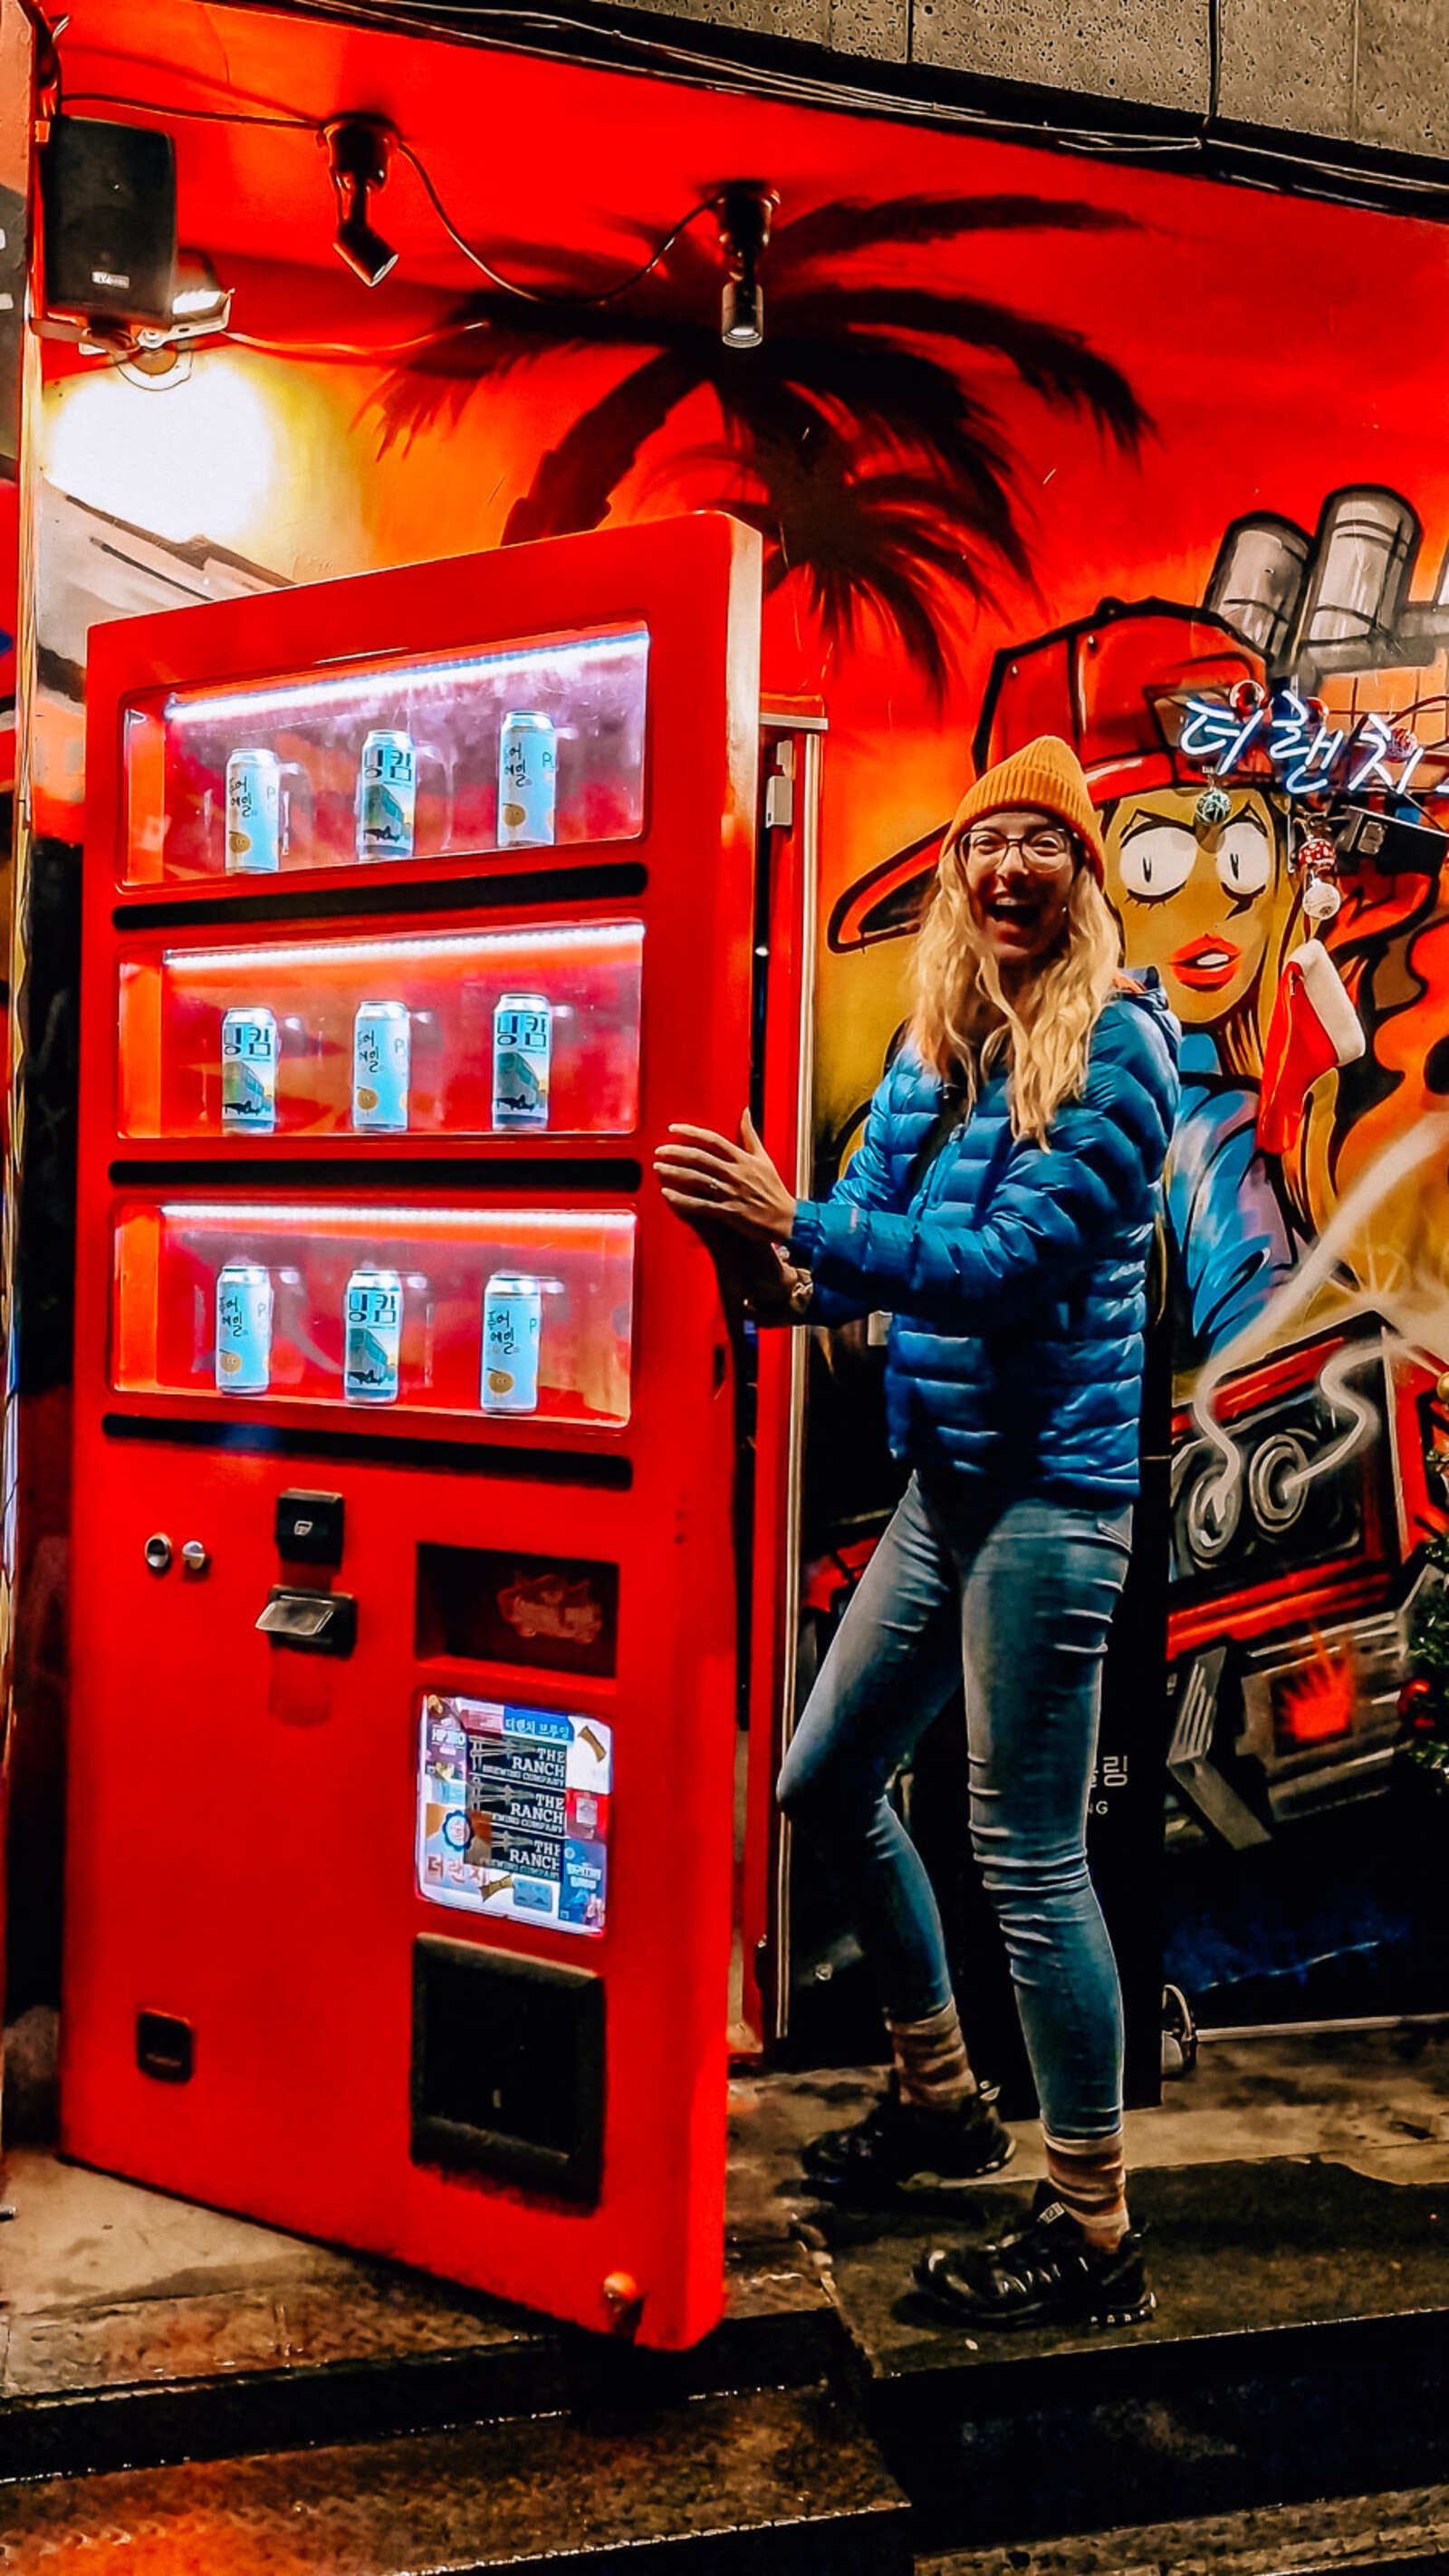 Helena walking into a doorway hidden behind a red vending machine